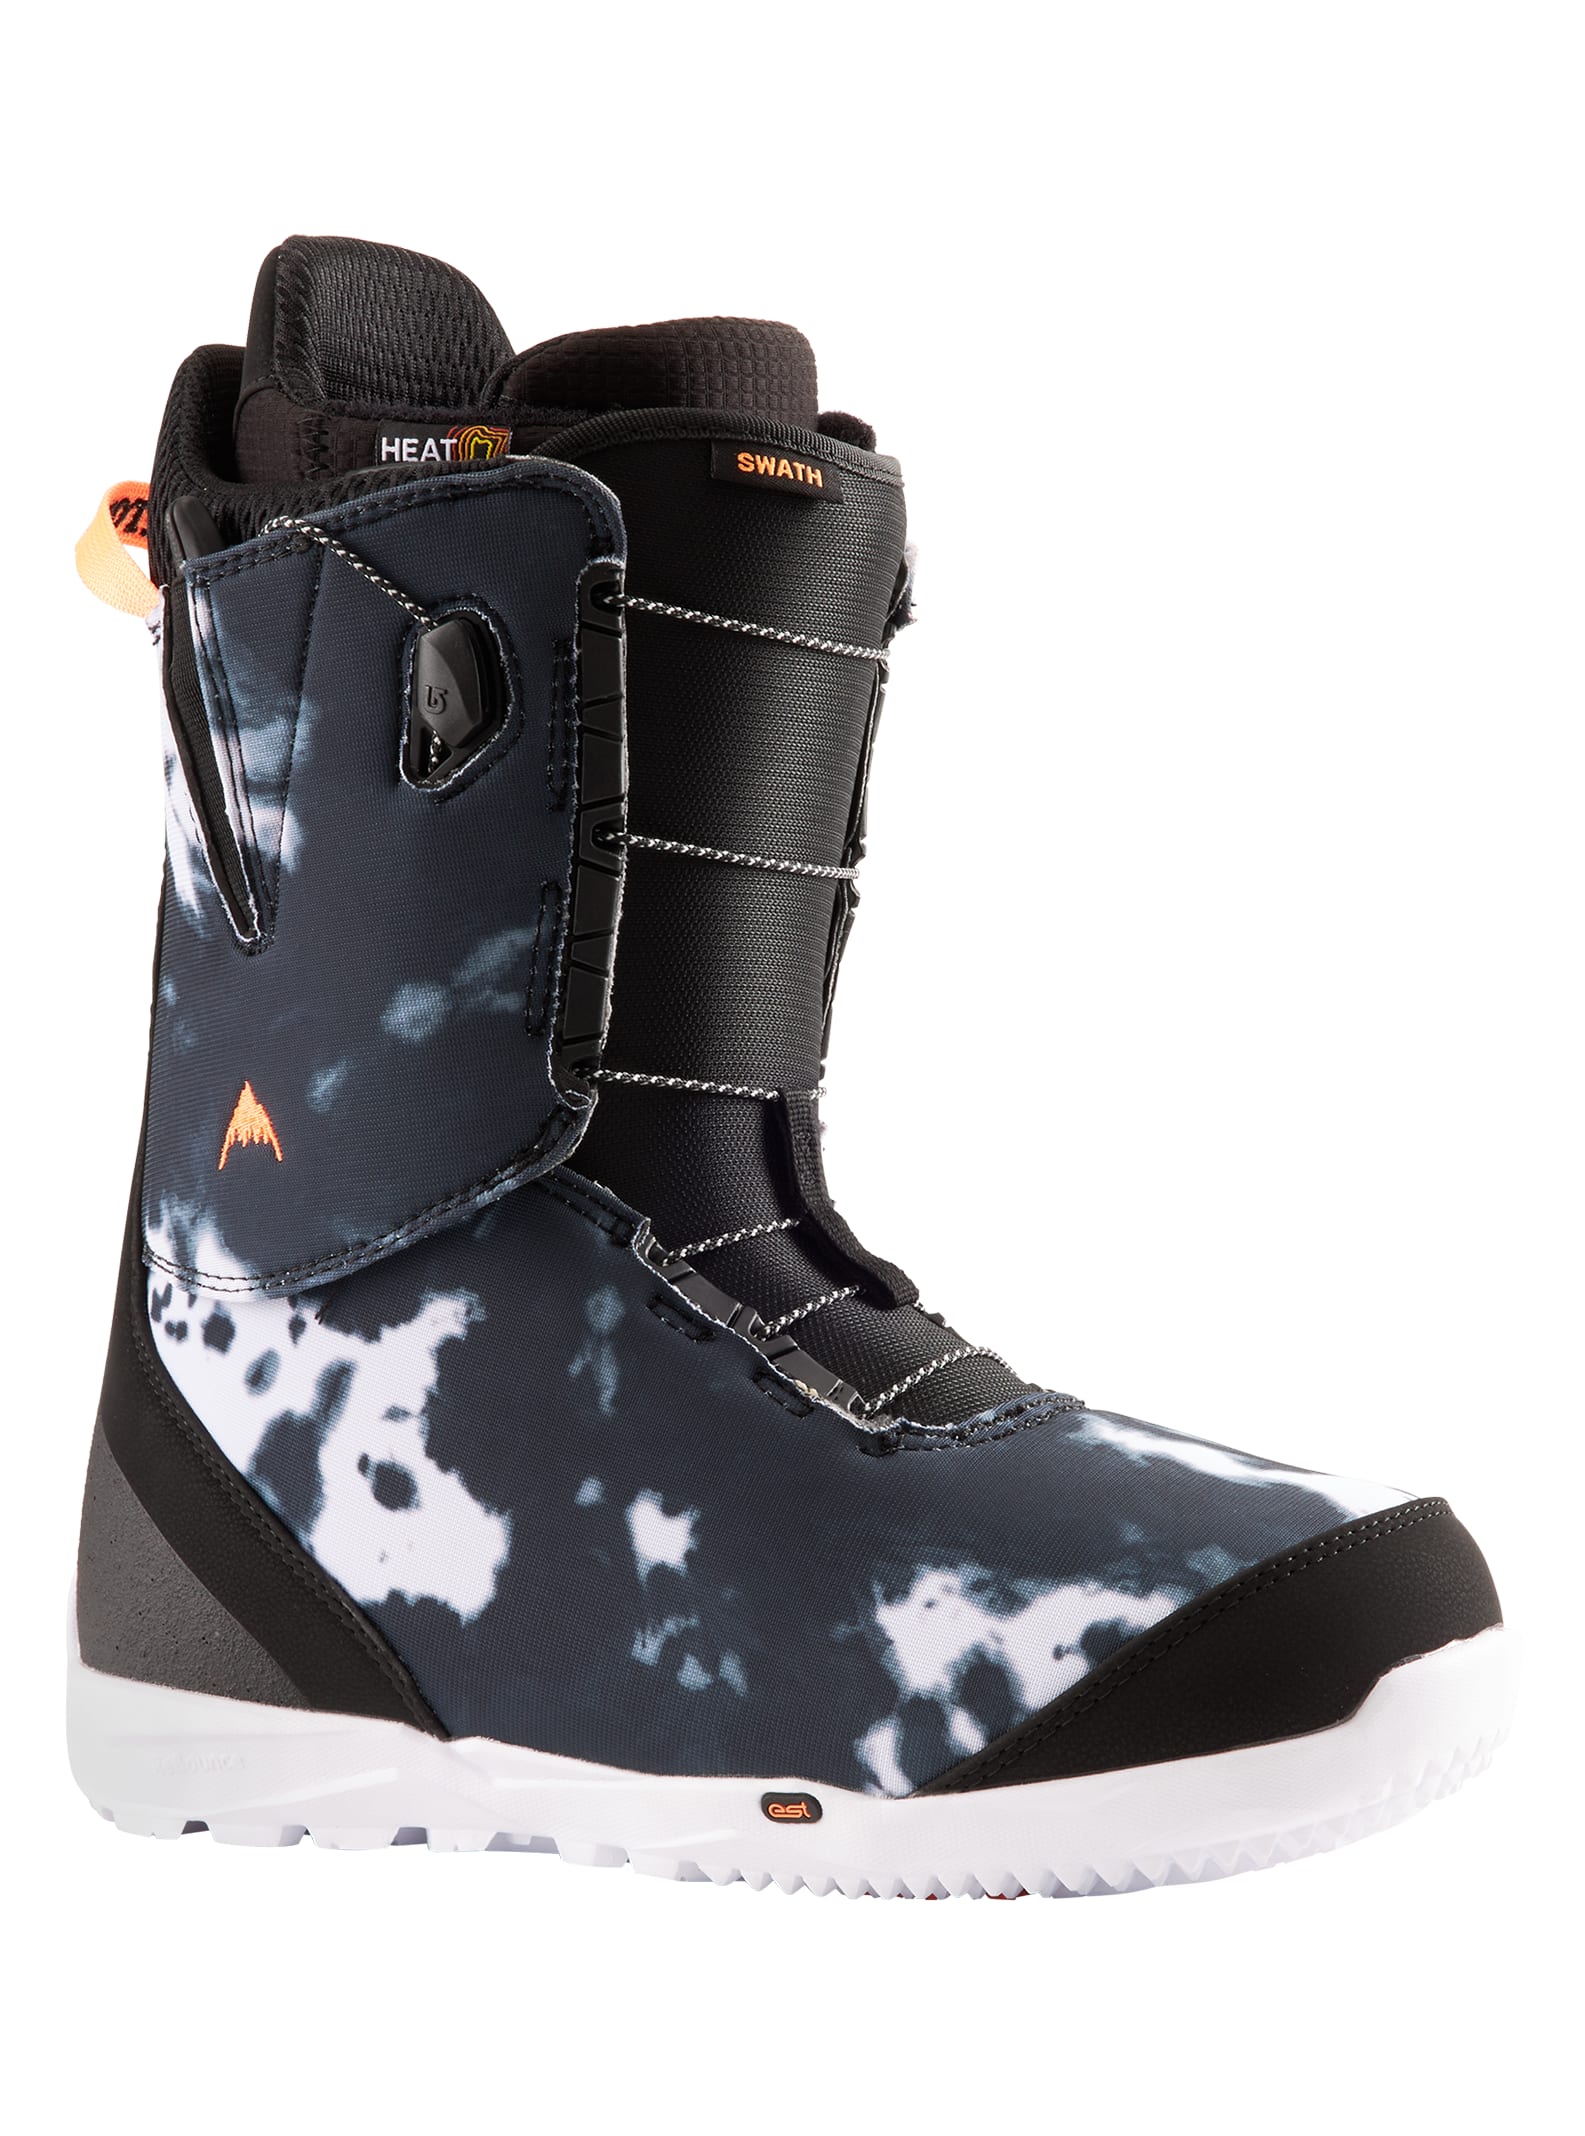 Men's Burton Swath Snowboard Boots